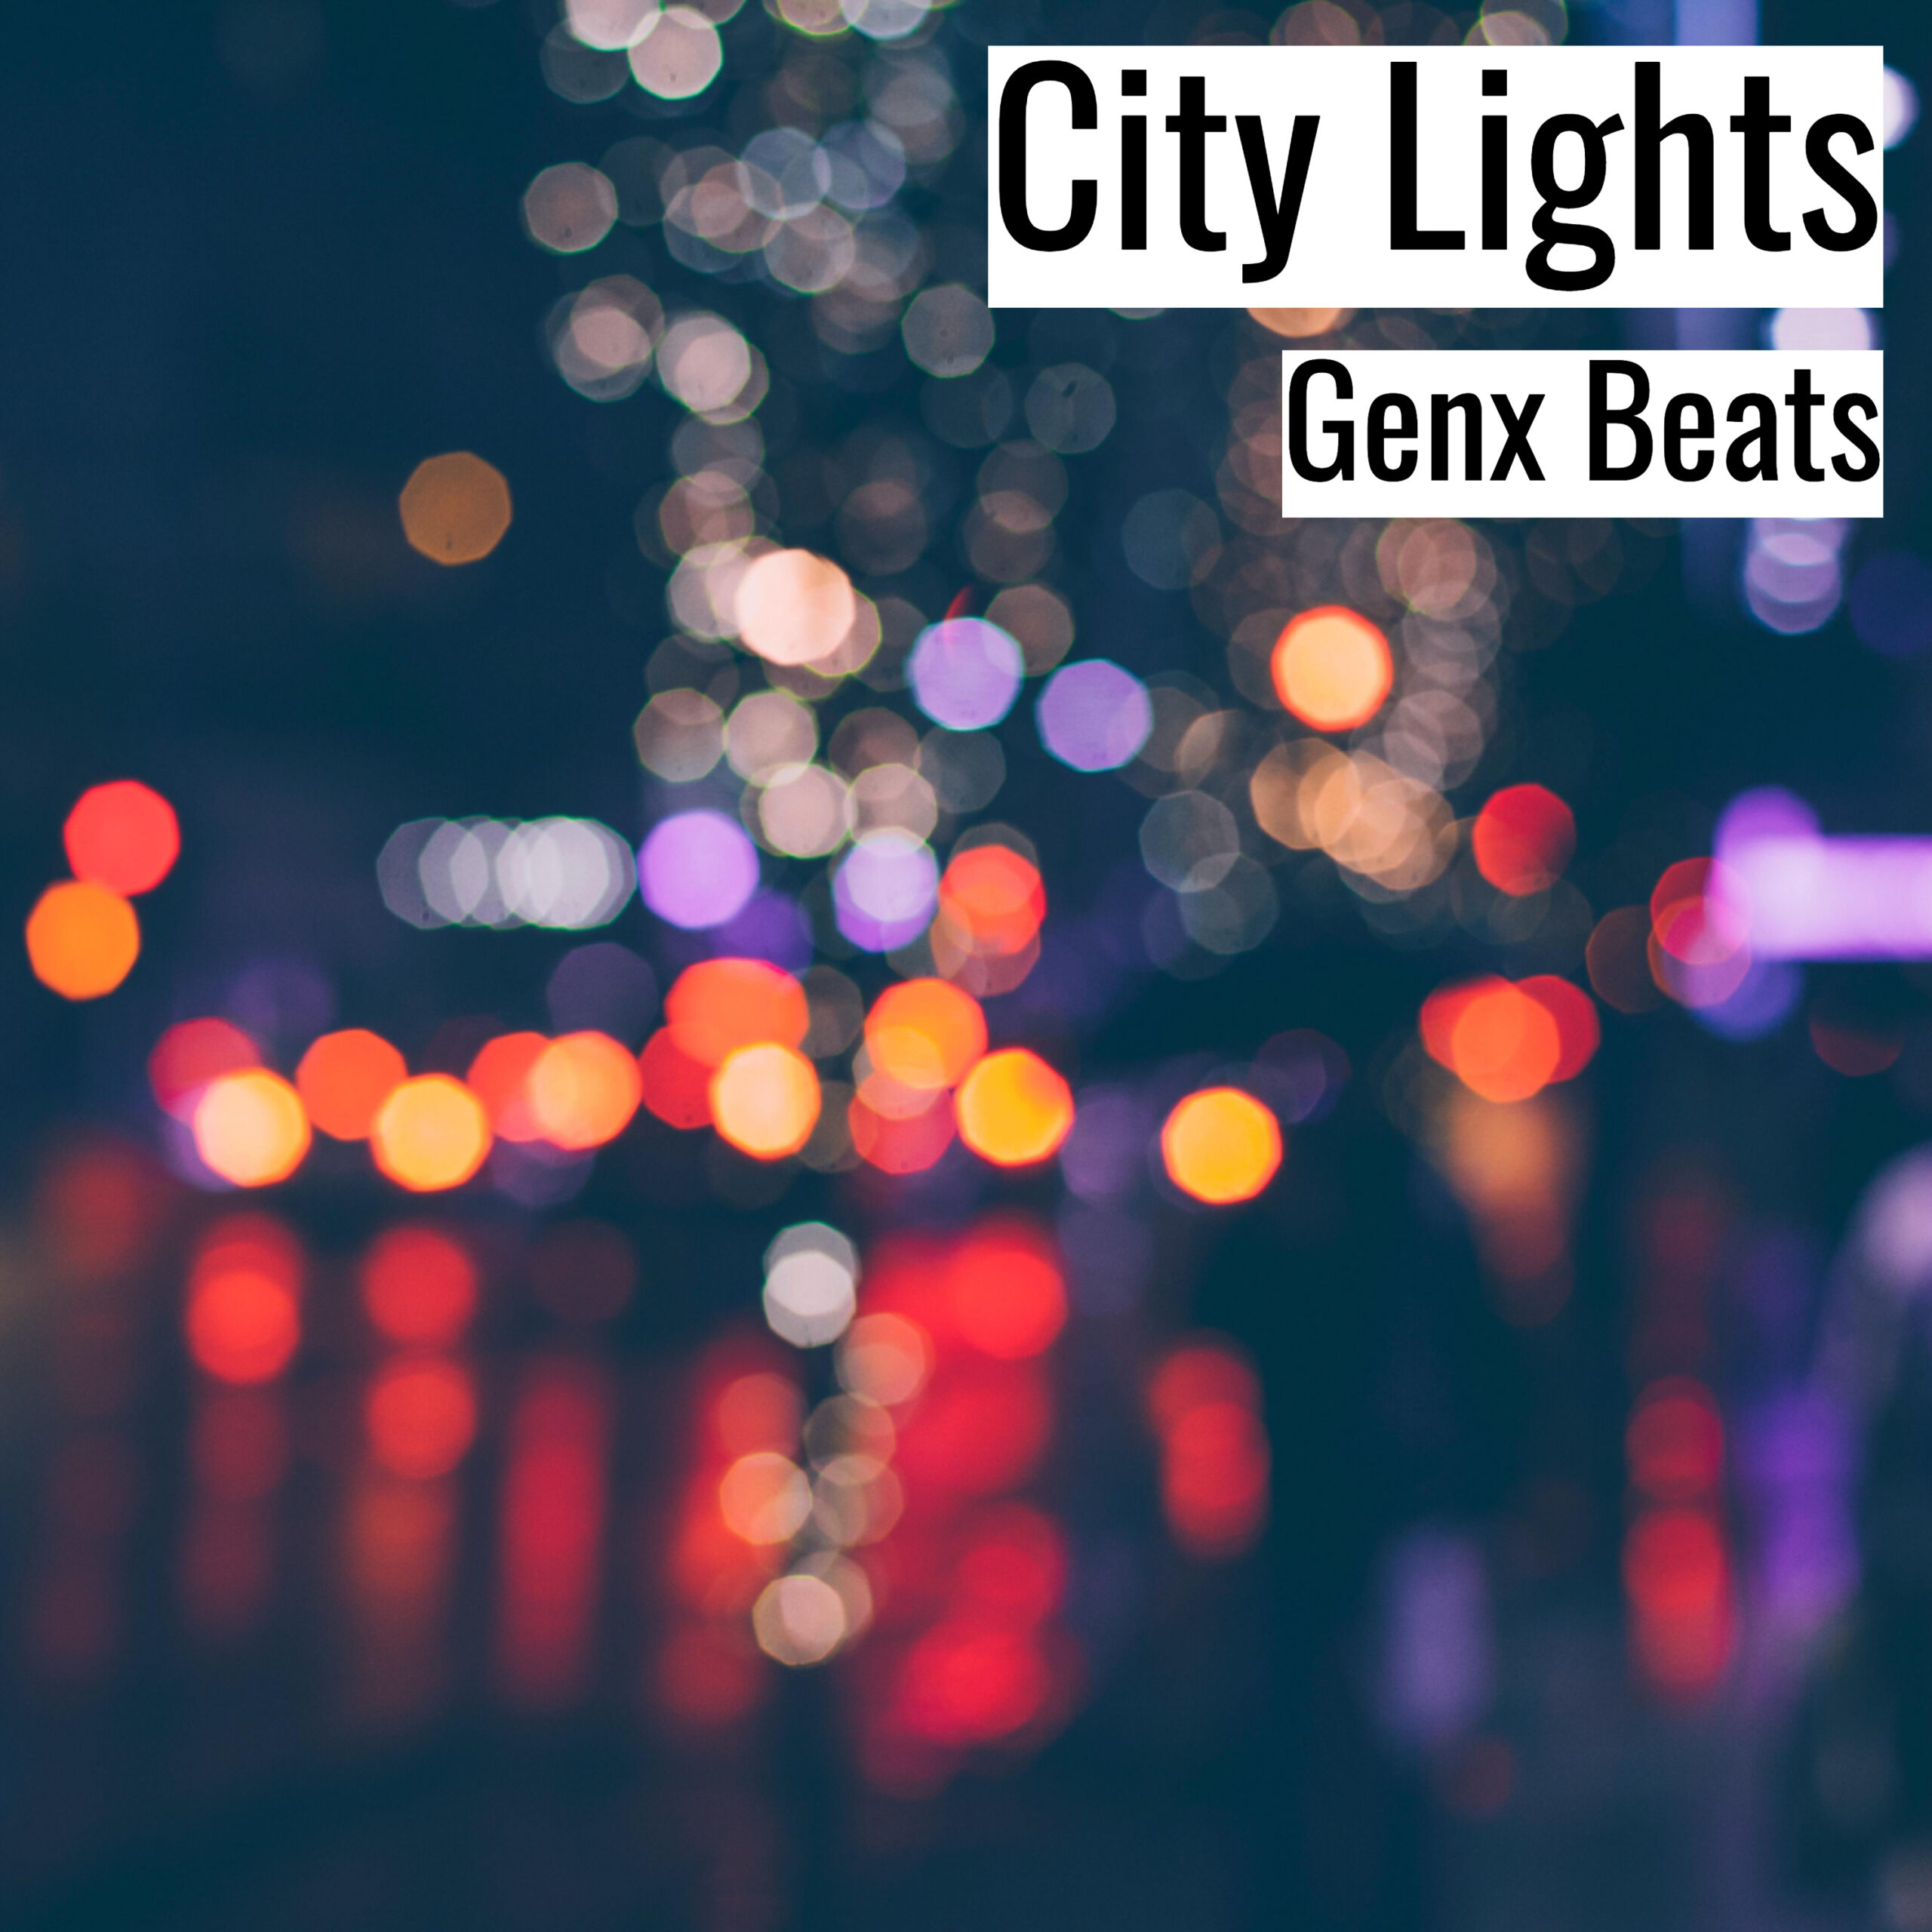 City Lights scaled